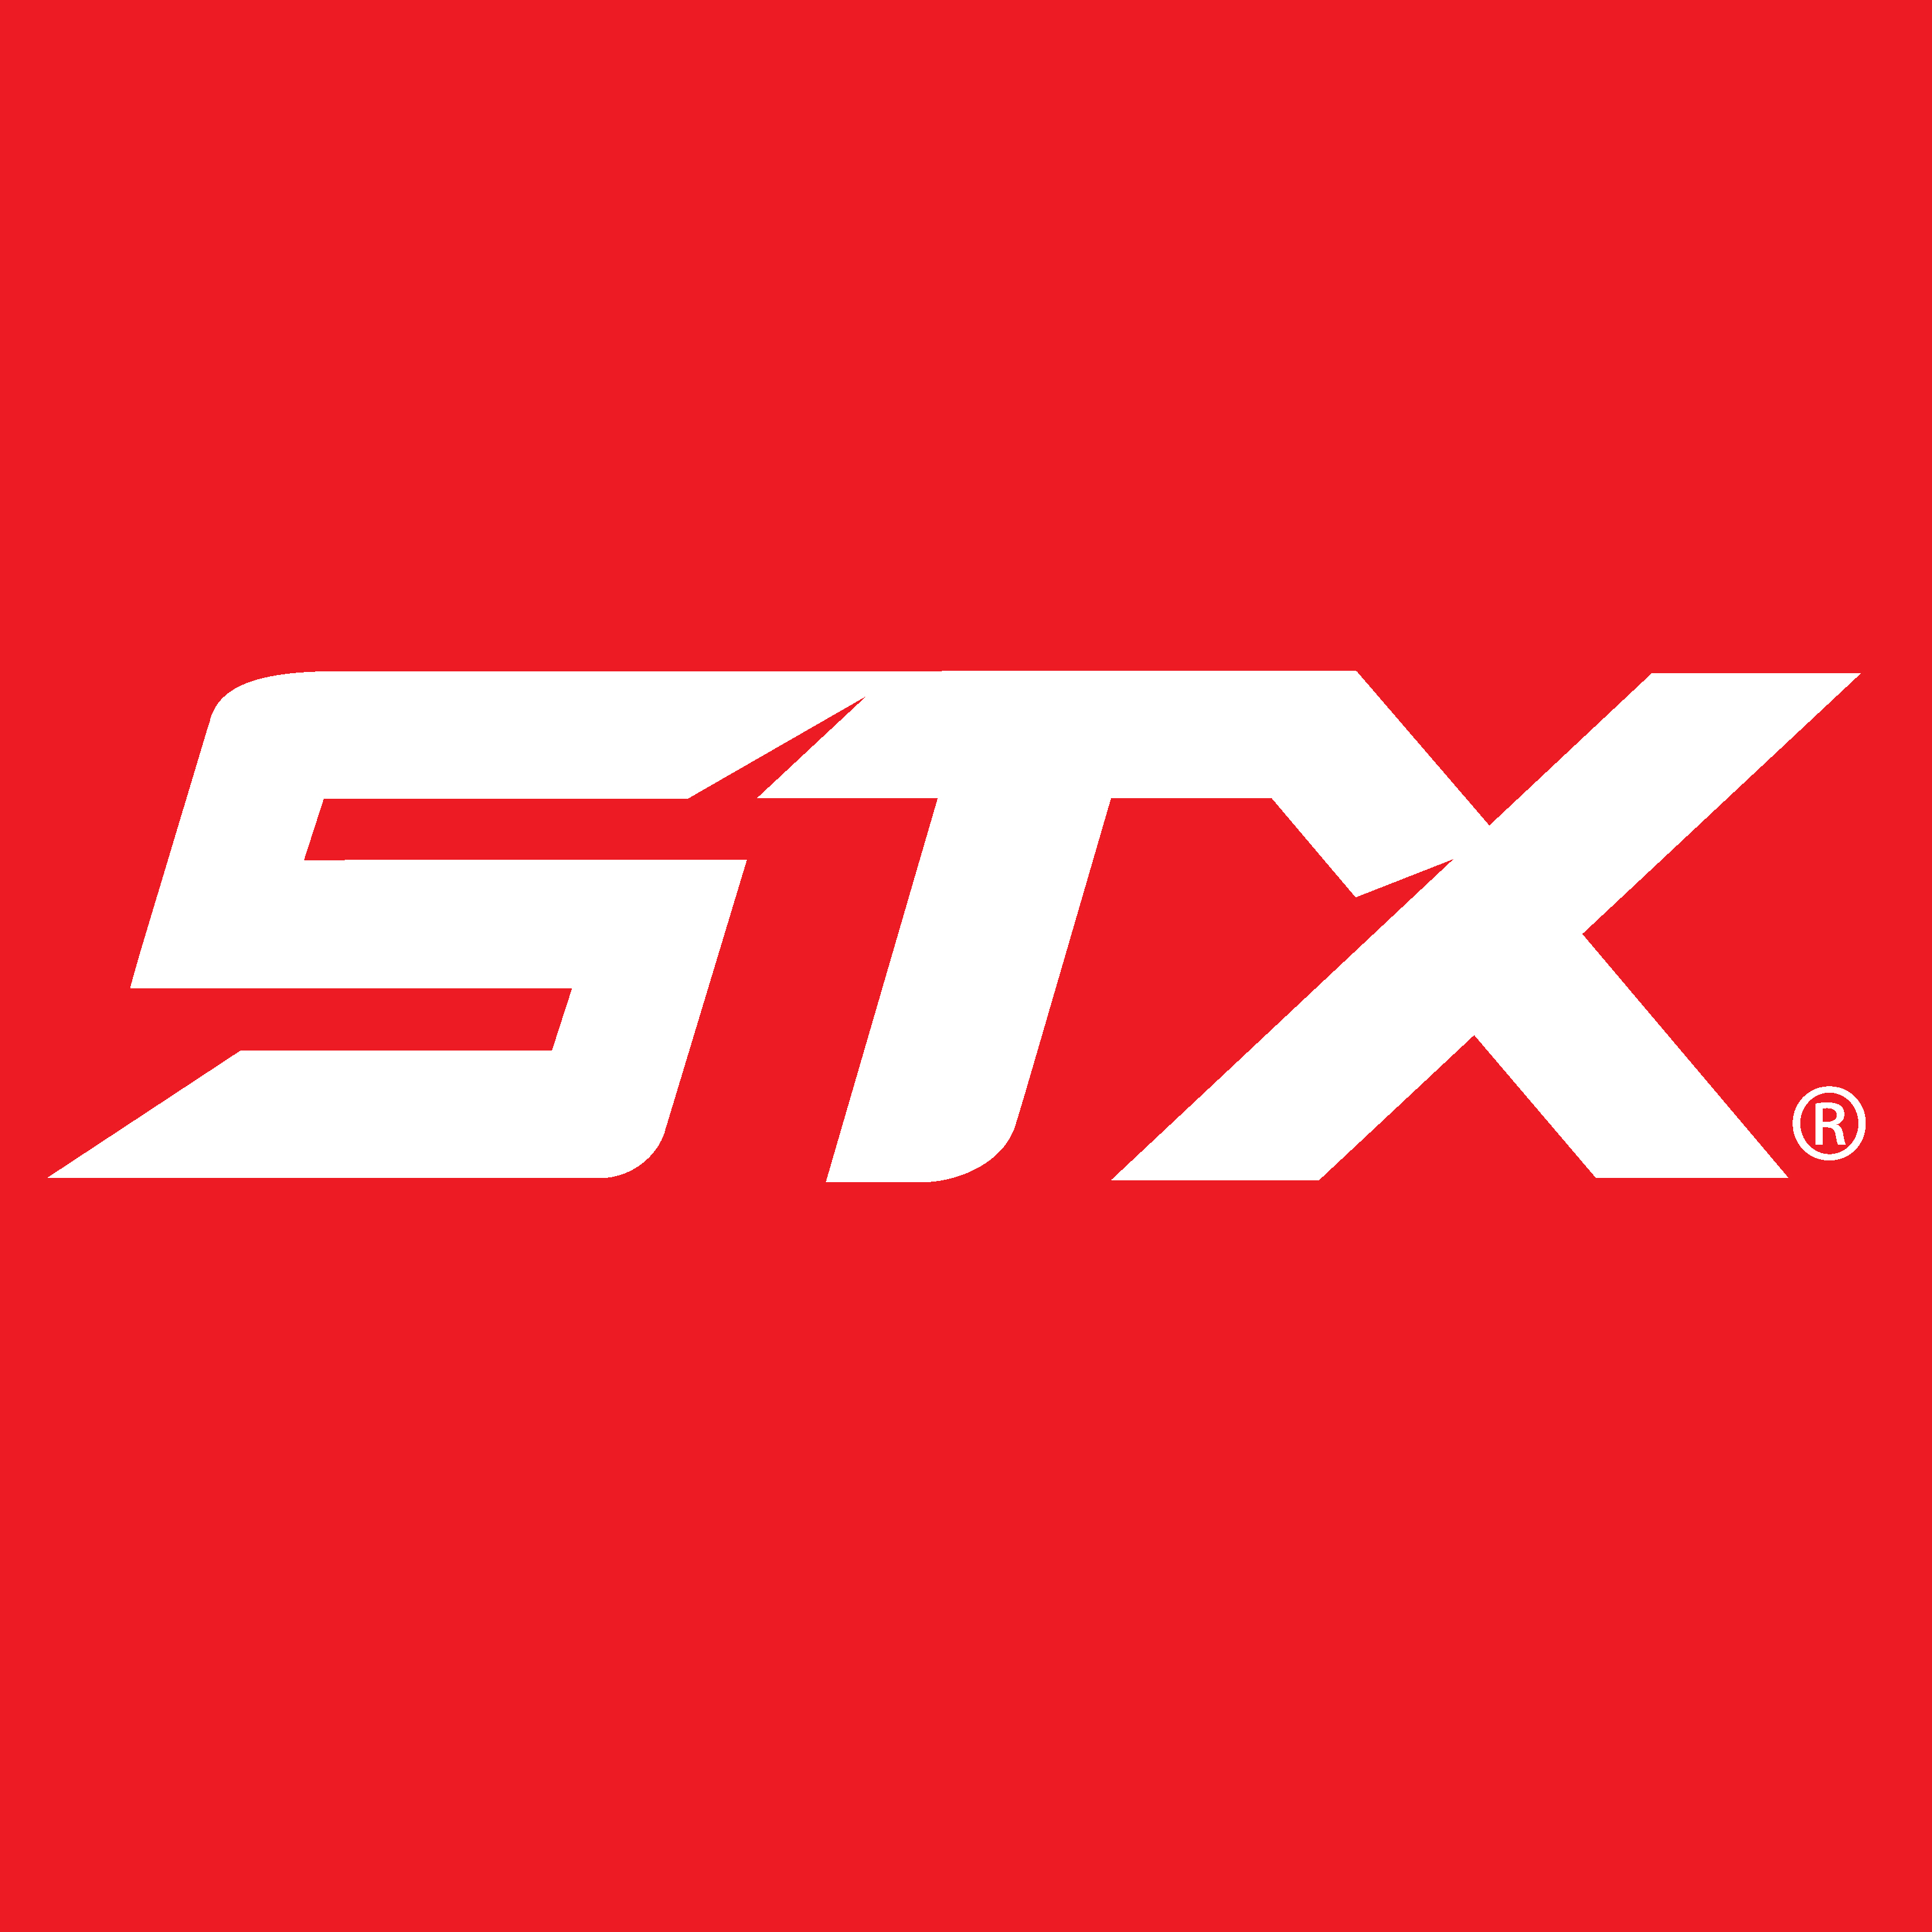 STX - GOLD SPONSOR